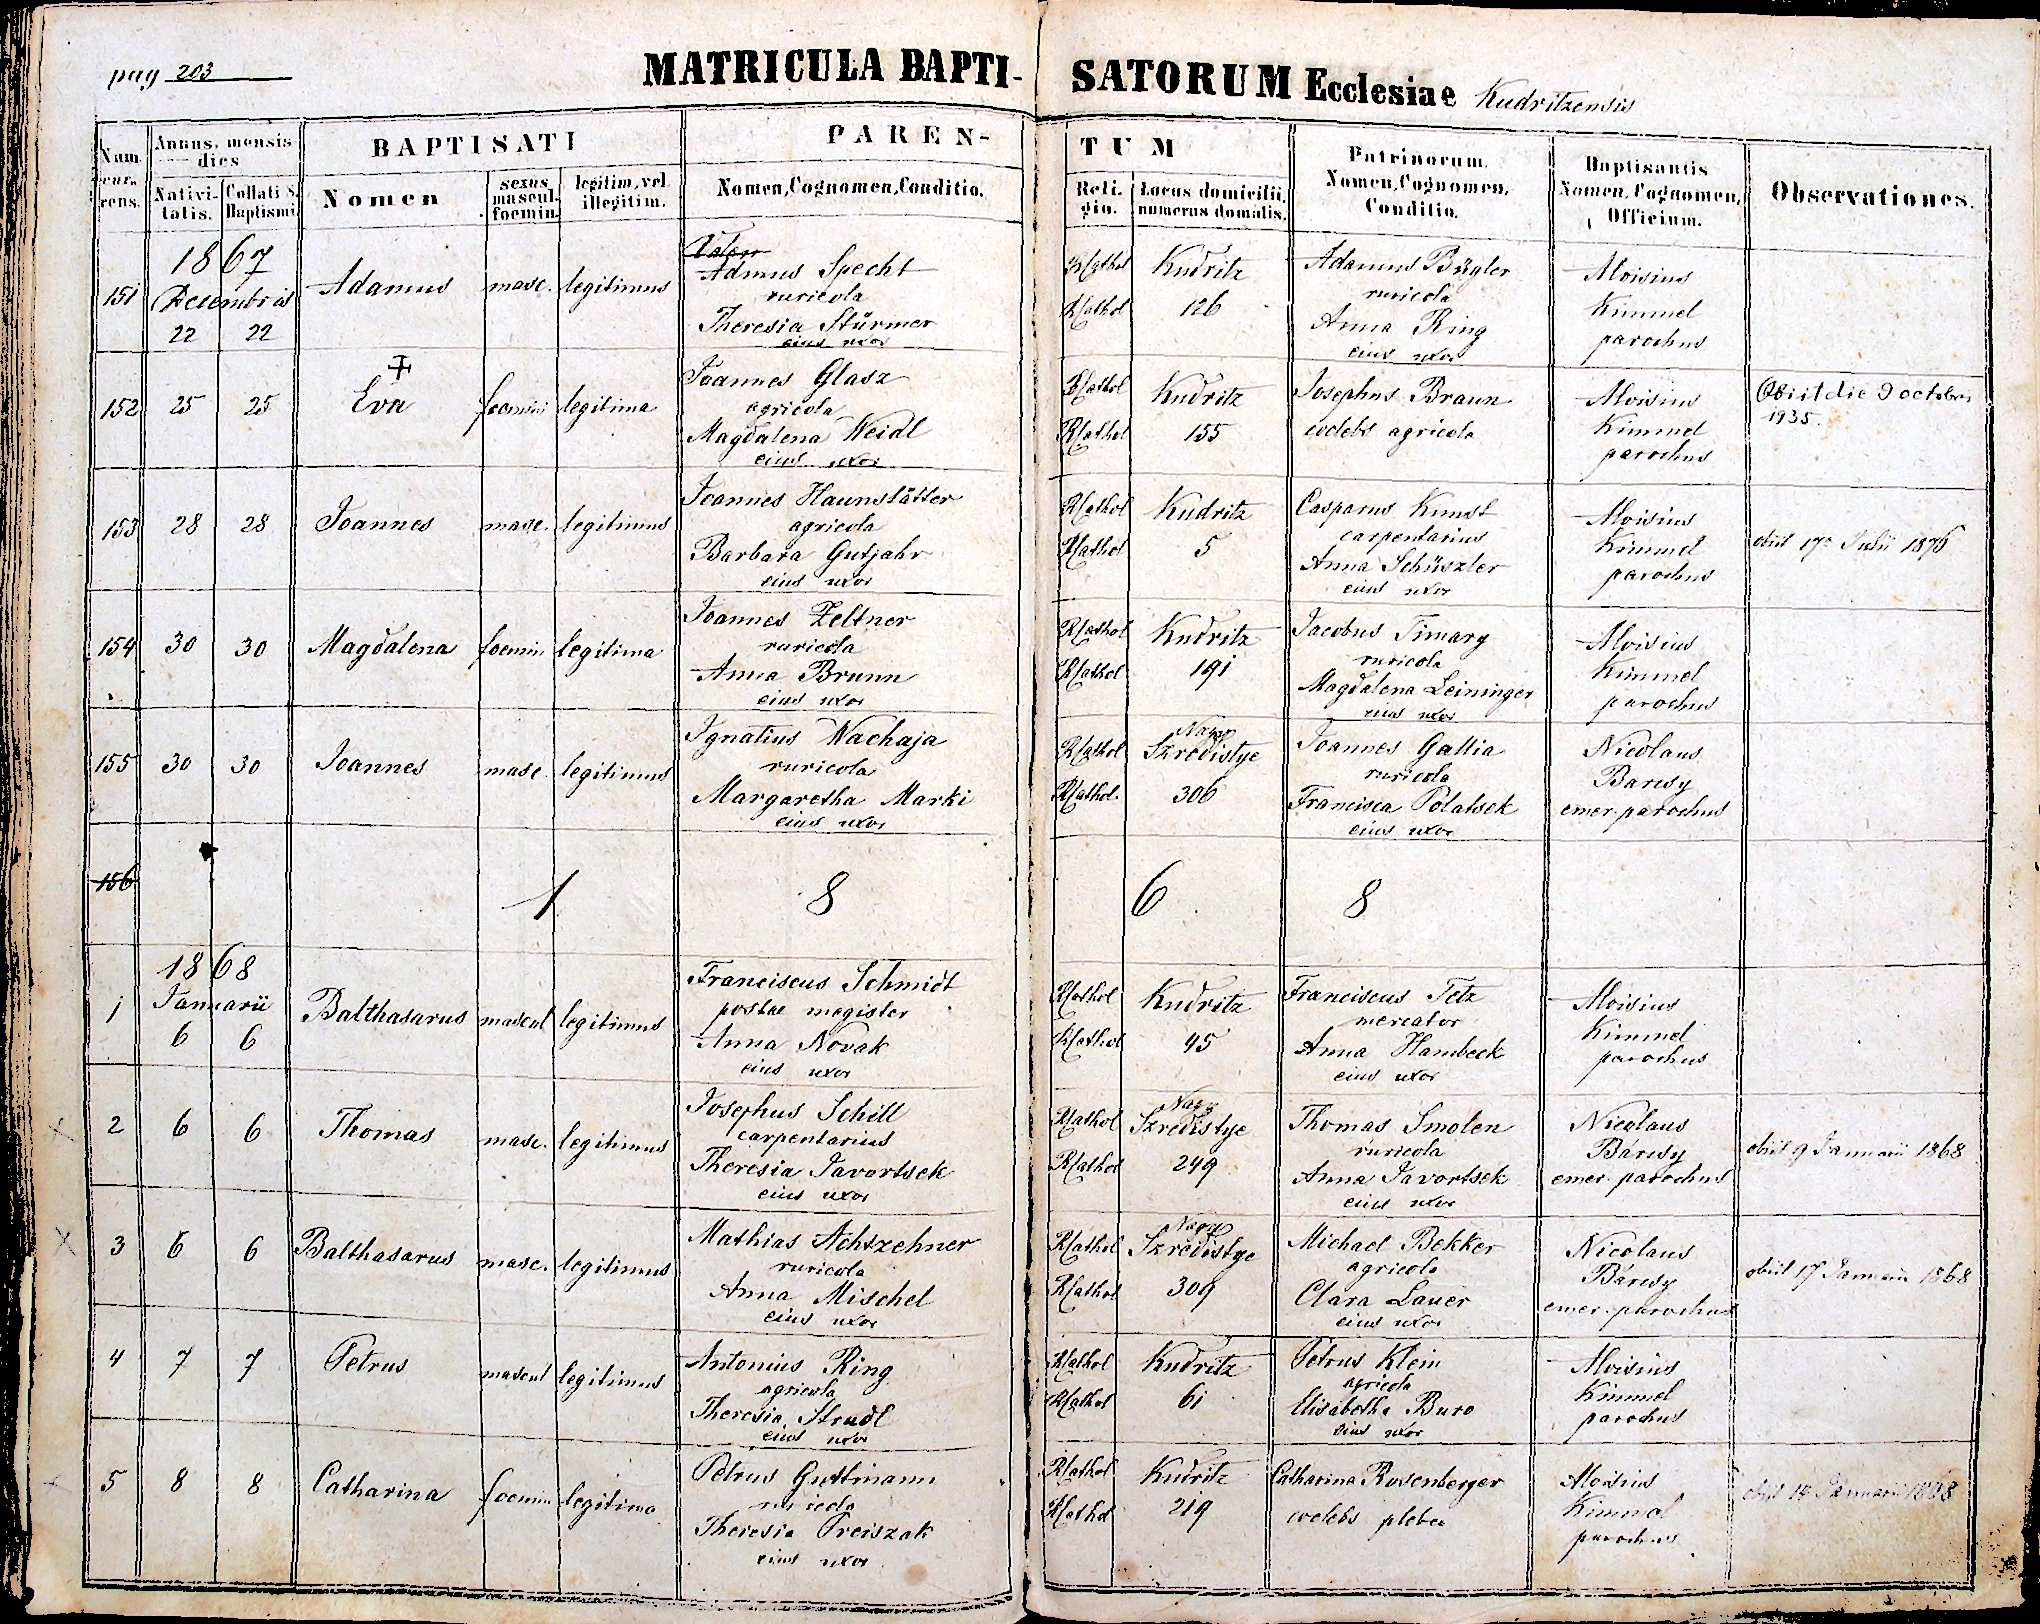 images/church_records/BIRTHS/1852-1870B/203